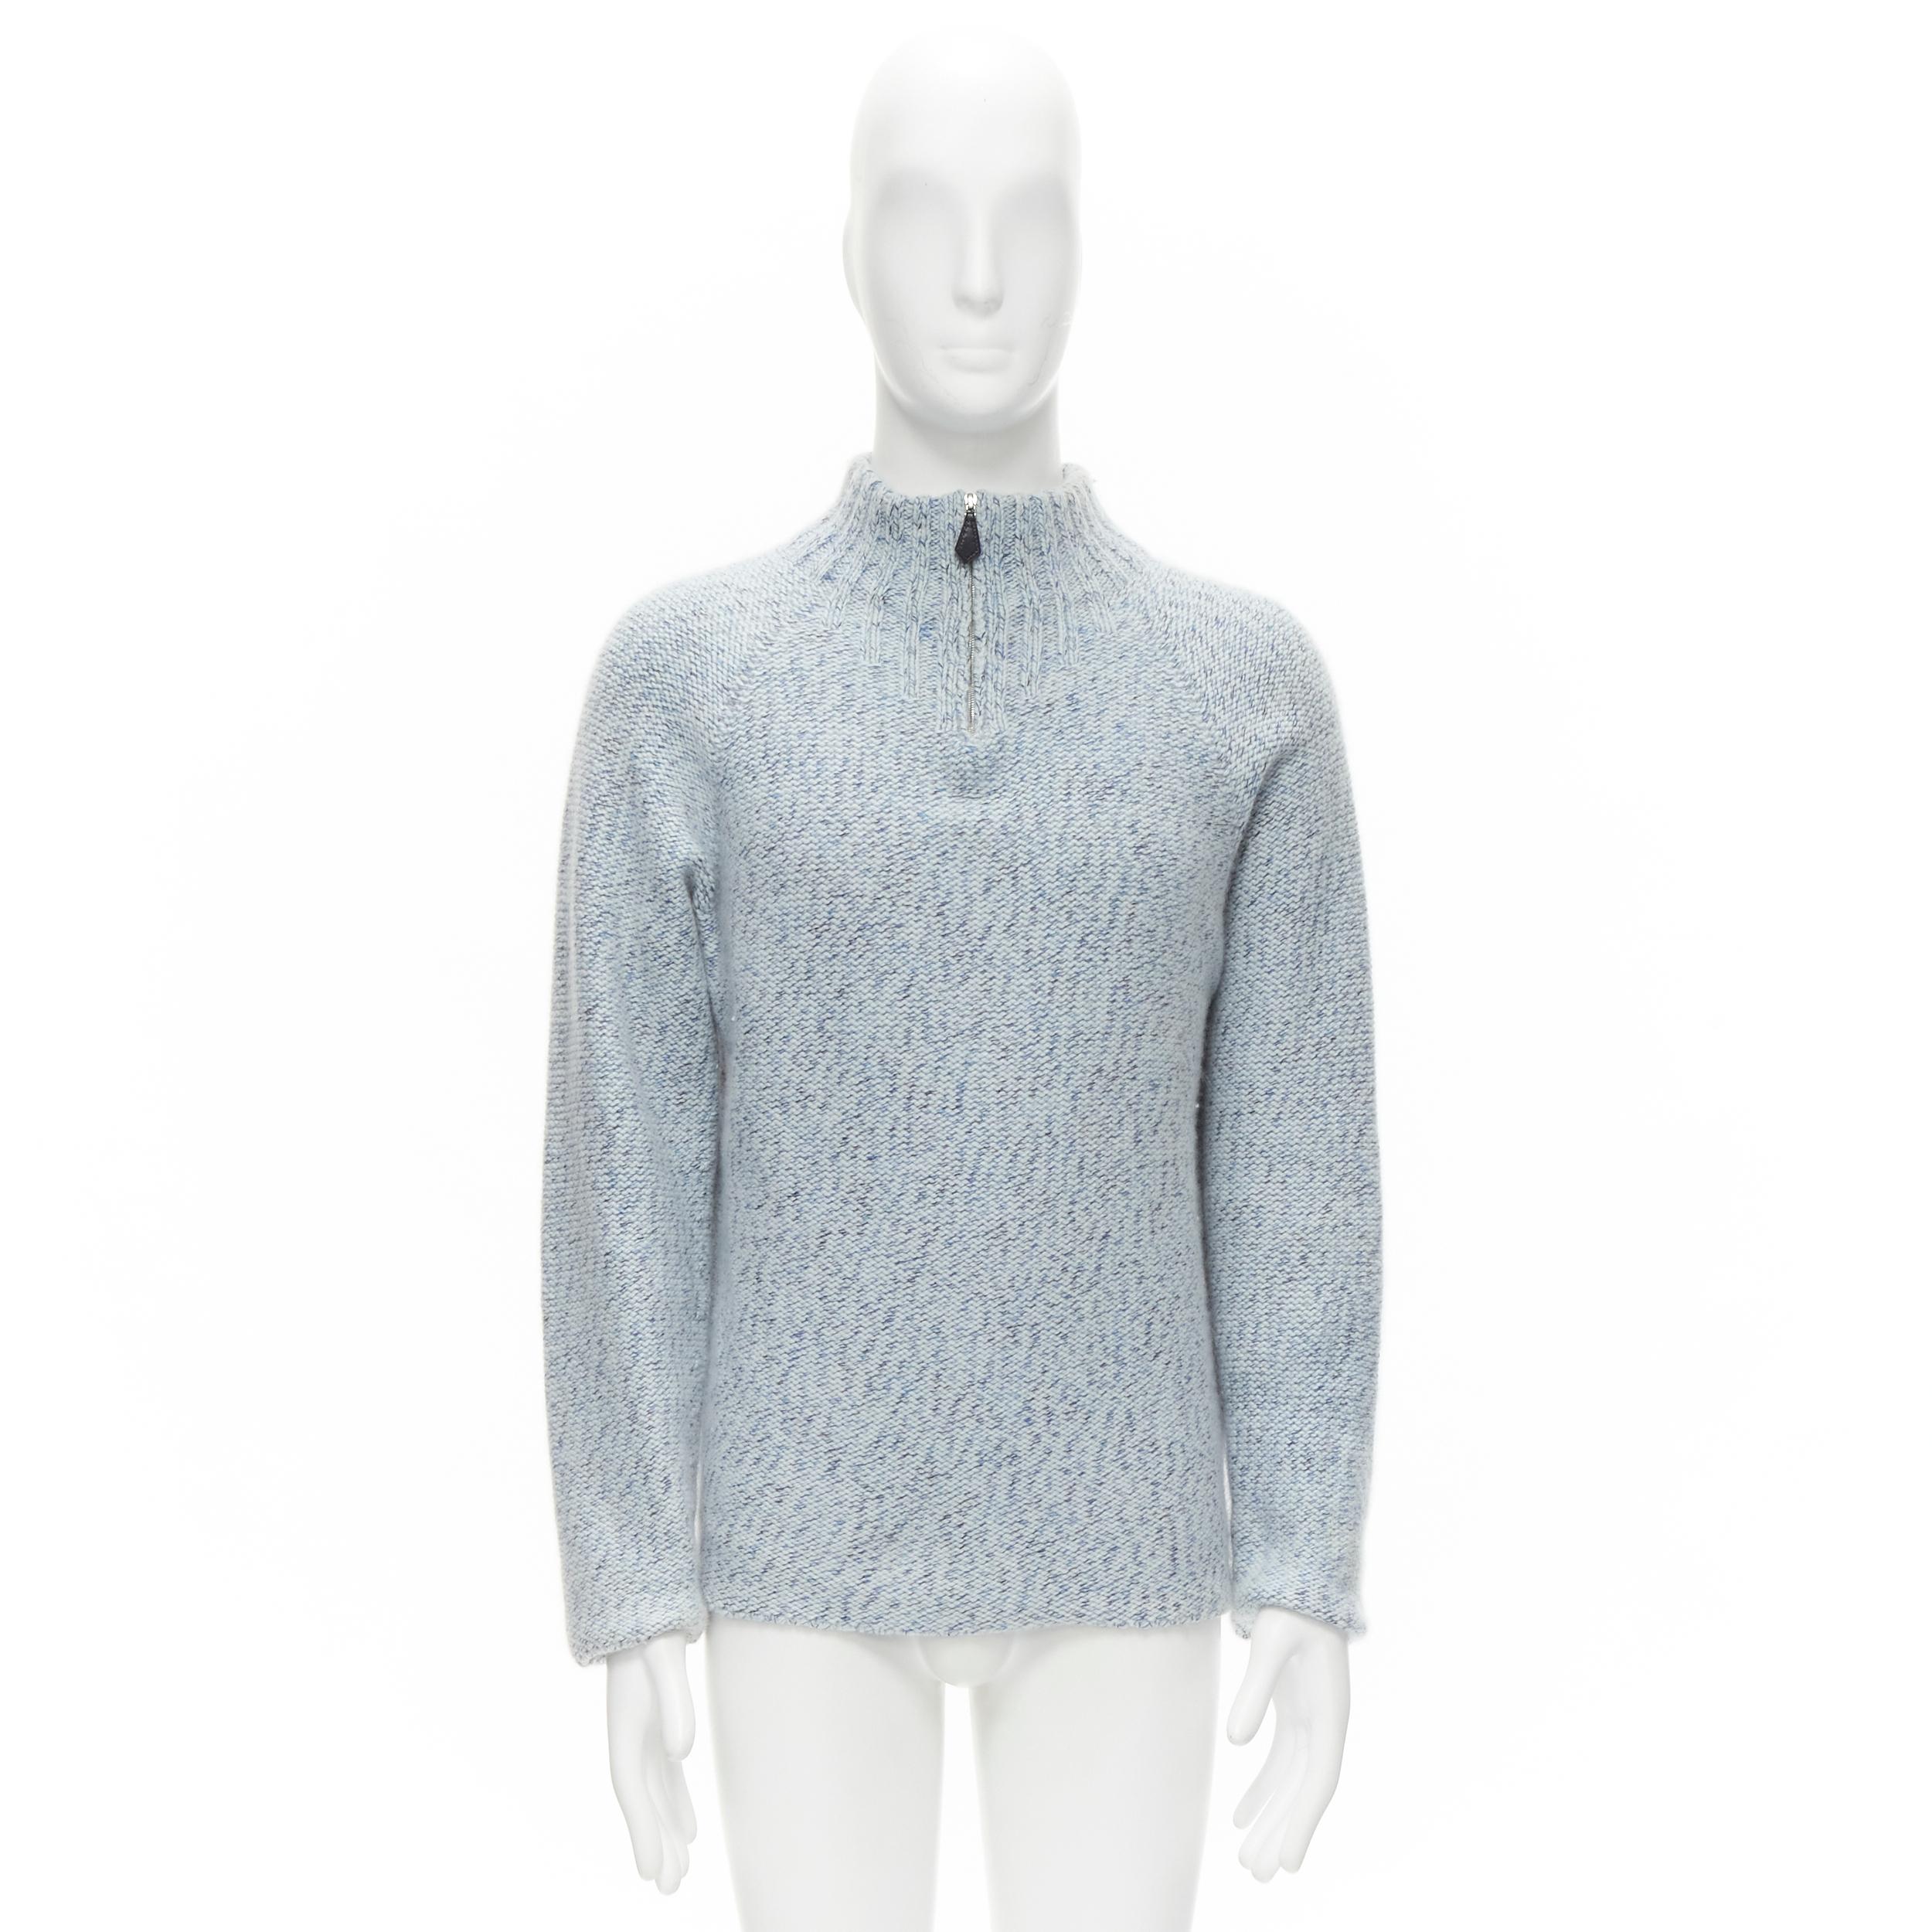 HERMES 100% cashmere blue speckle leather half zip high neck sweater L 6